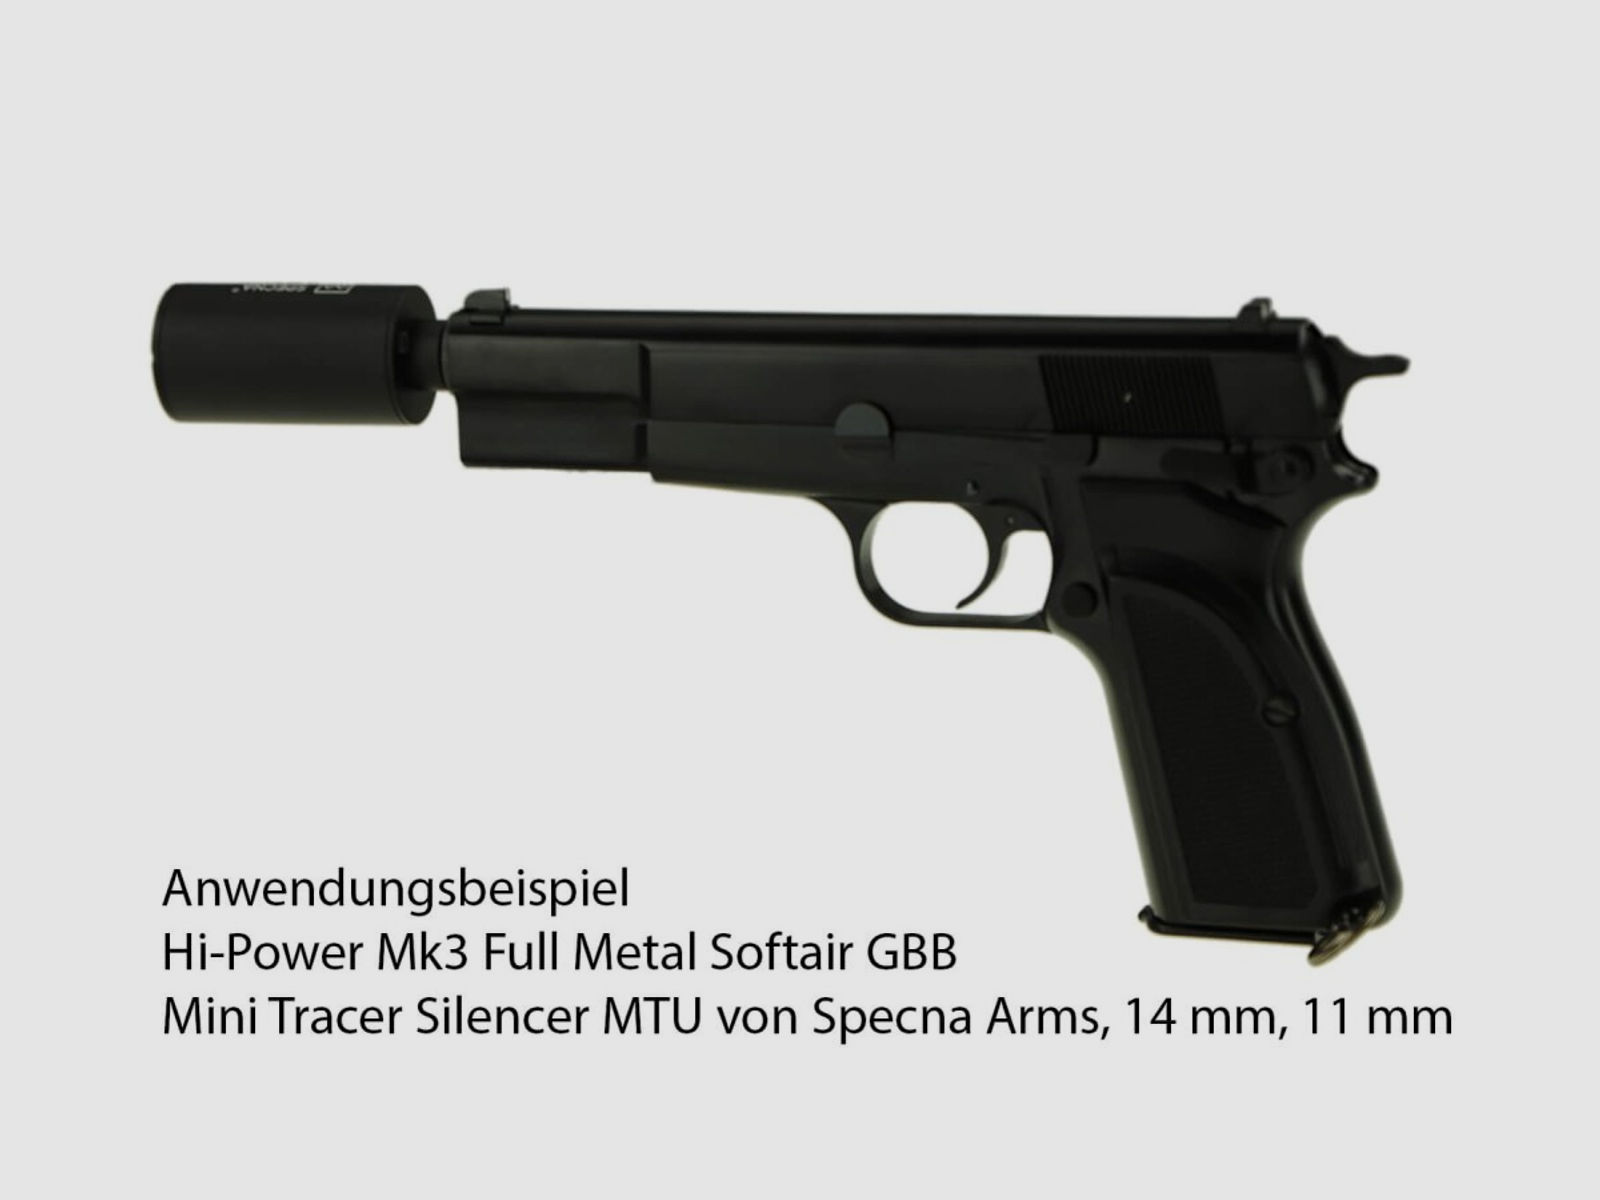 Mini Tracer Silencer MTU von Specna Arms, 14 mm, 11 mm